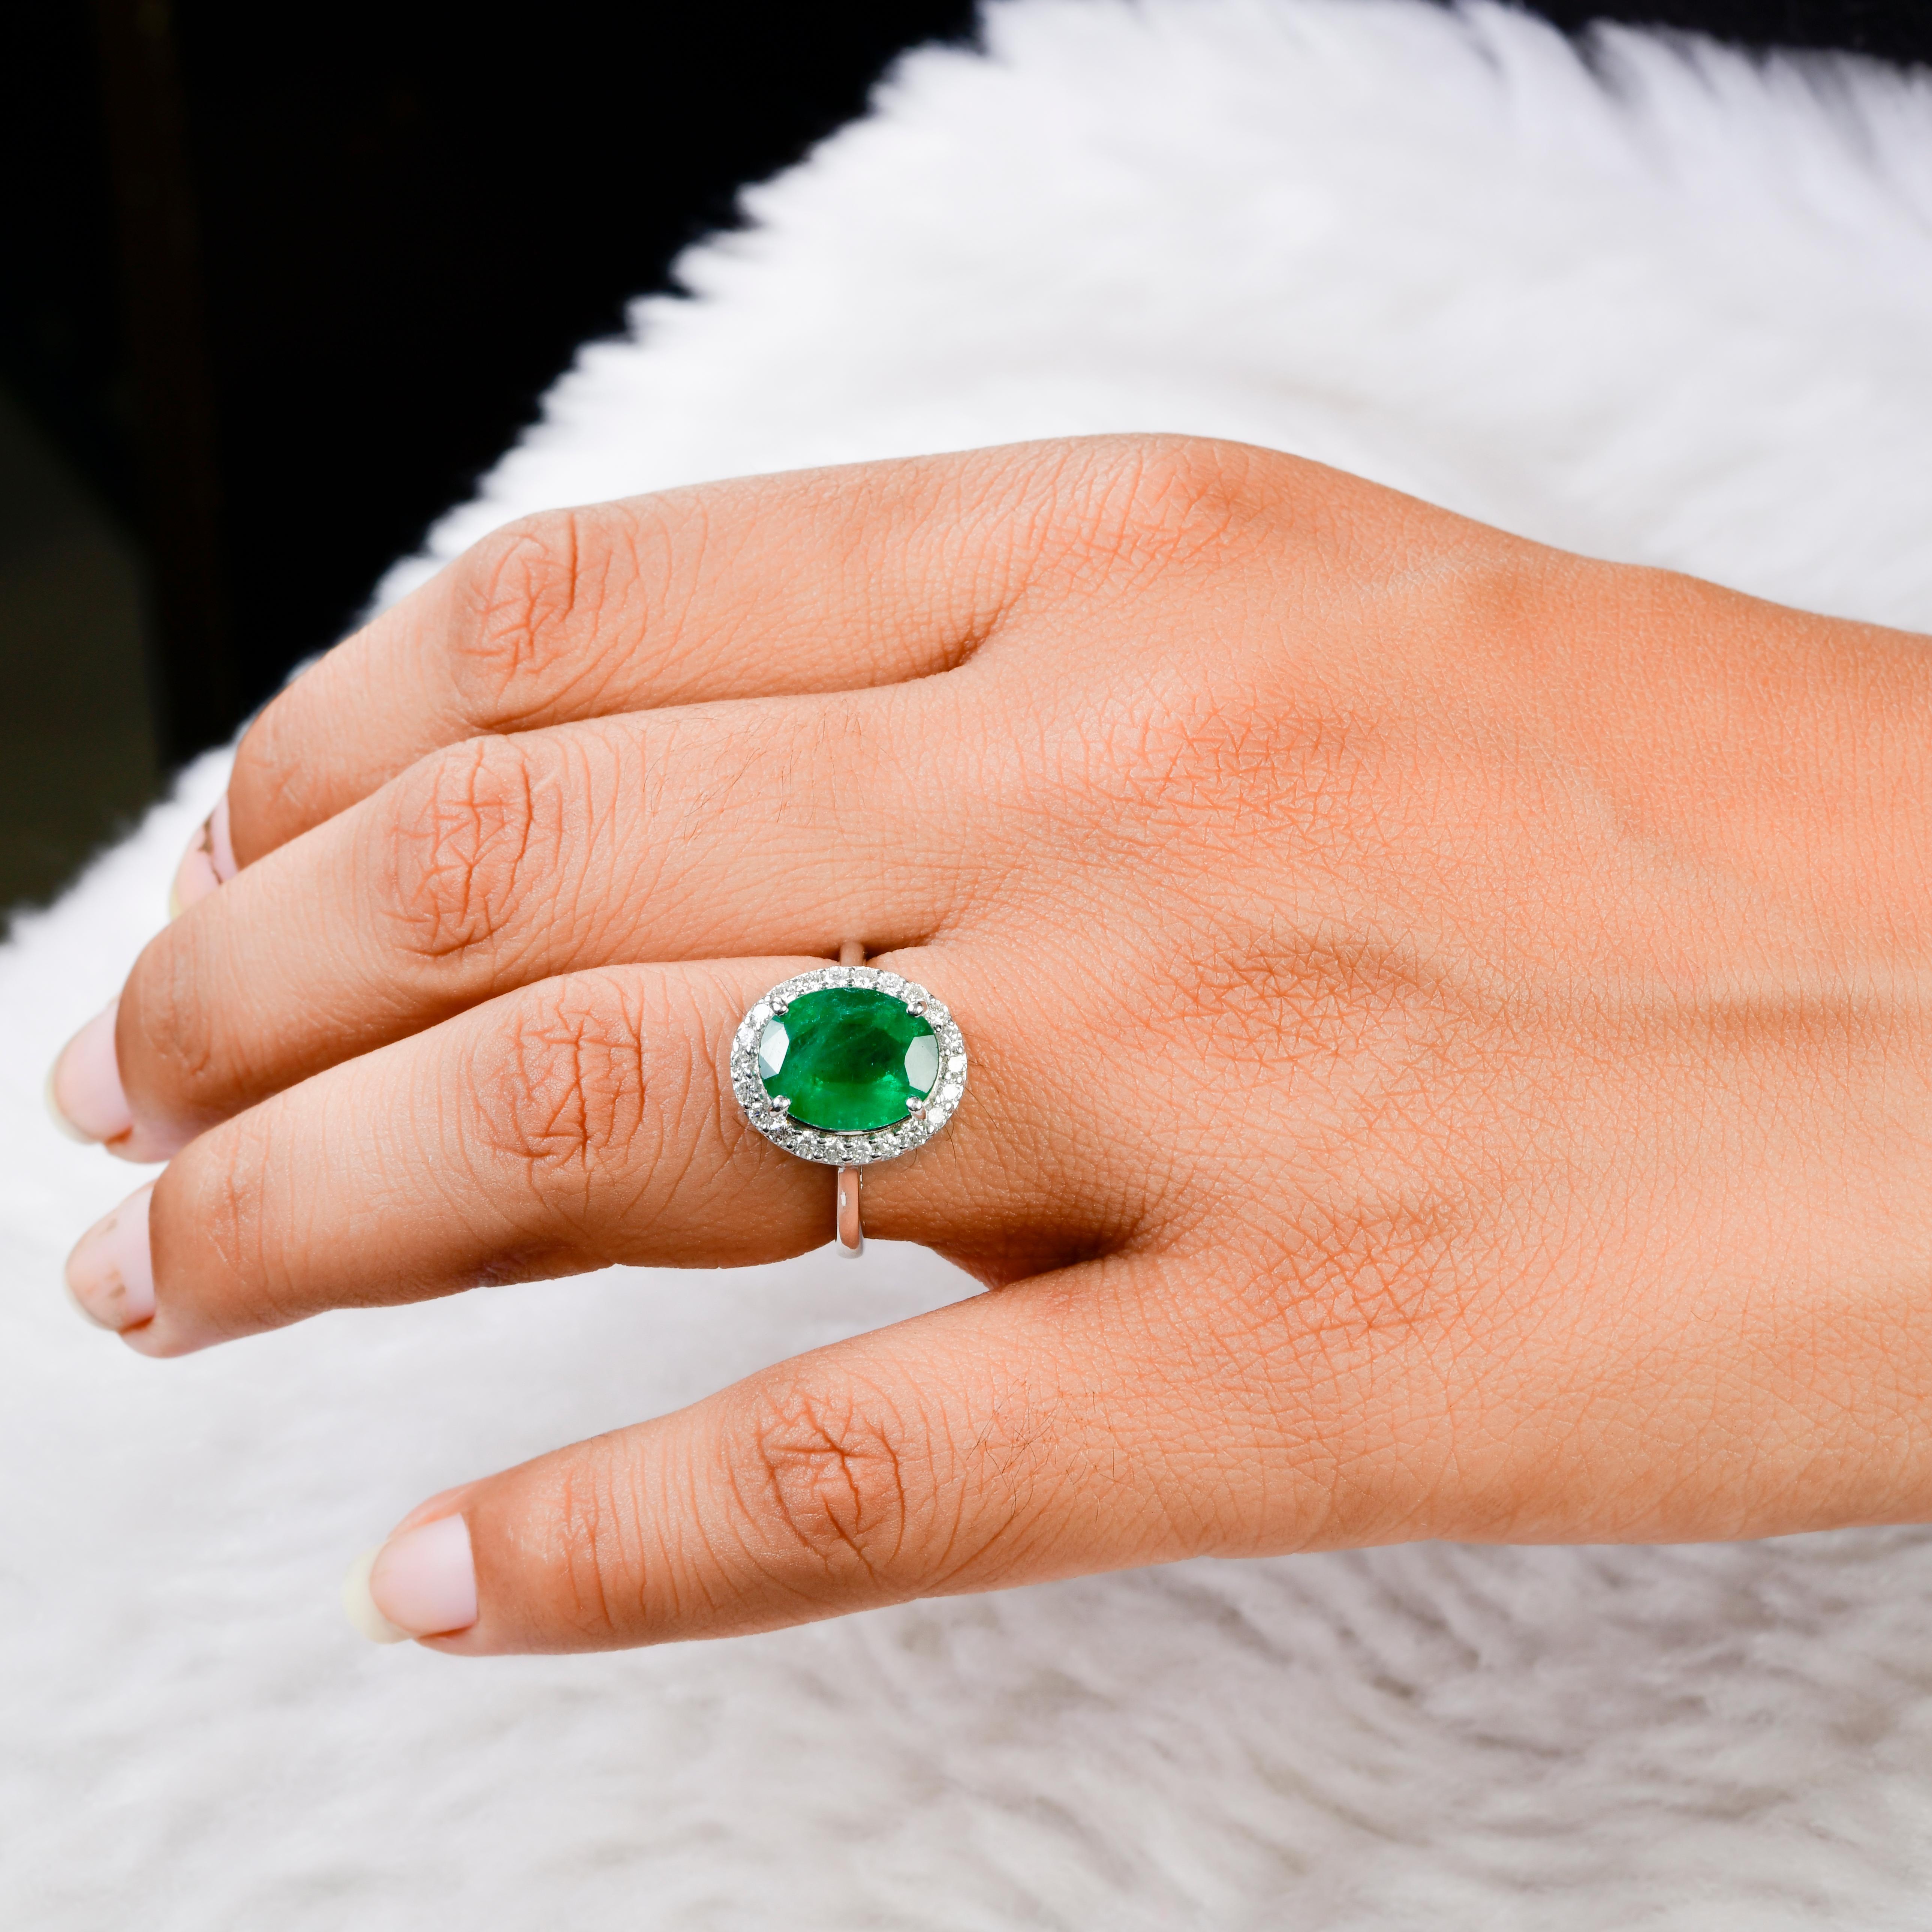 Women's Oval Zambian Emerald Gemstone Cocktail Ring Diamond 18 Karat White Gold Jewelry For Sale